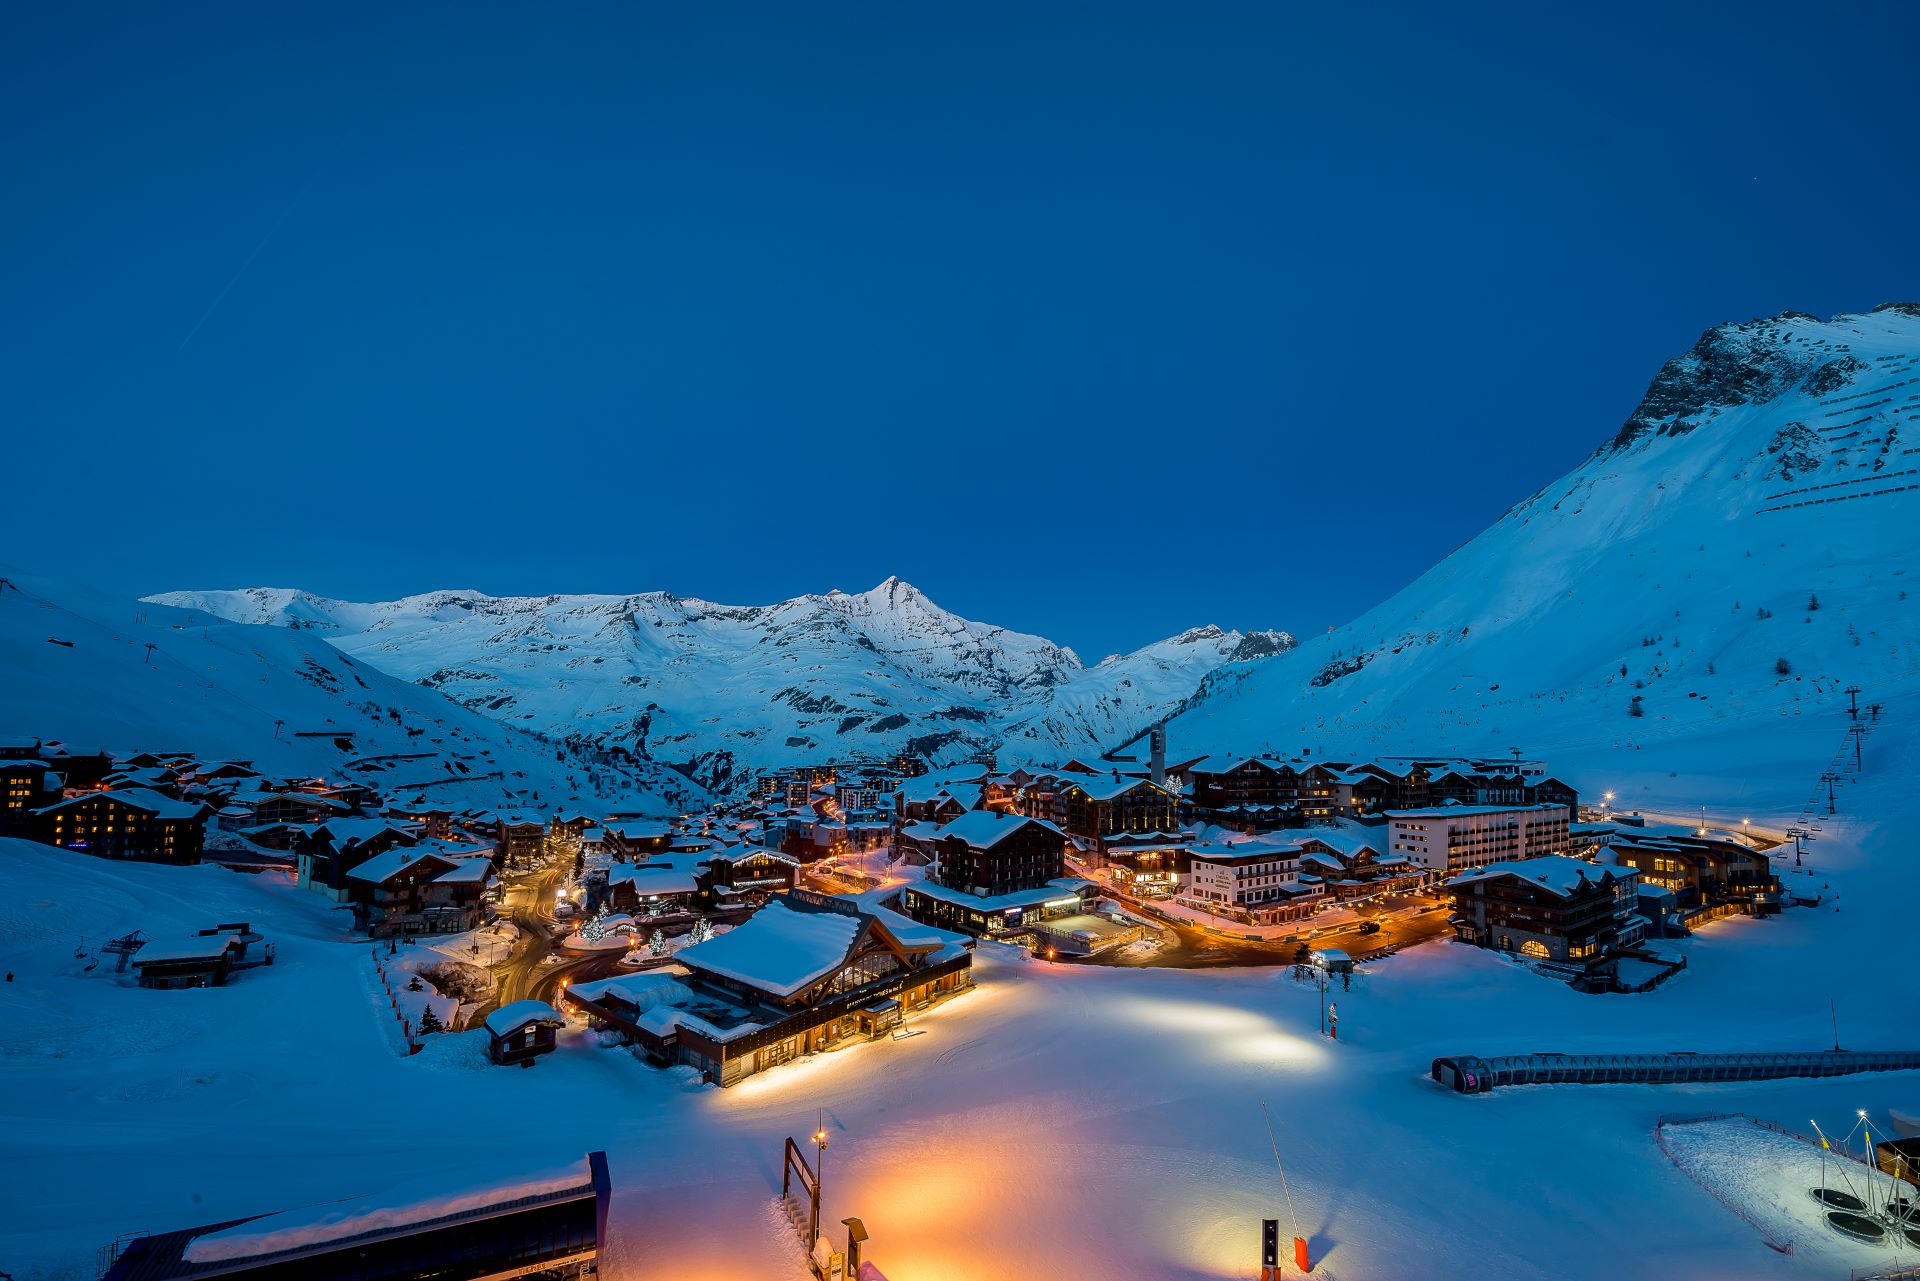 tignes-night-ski-resort-winter-french-alps